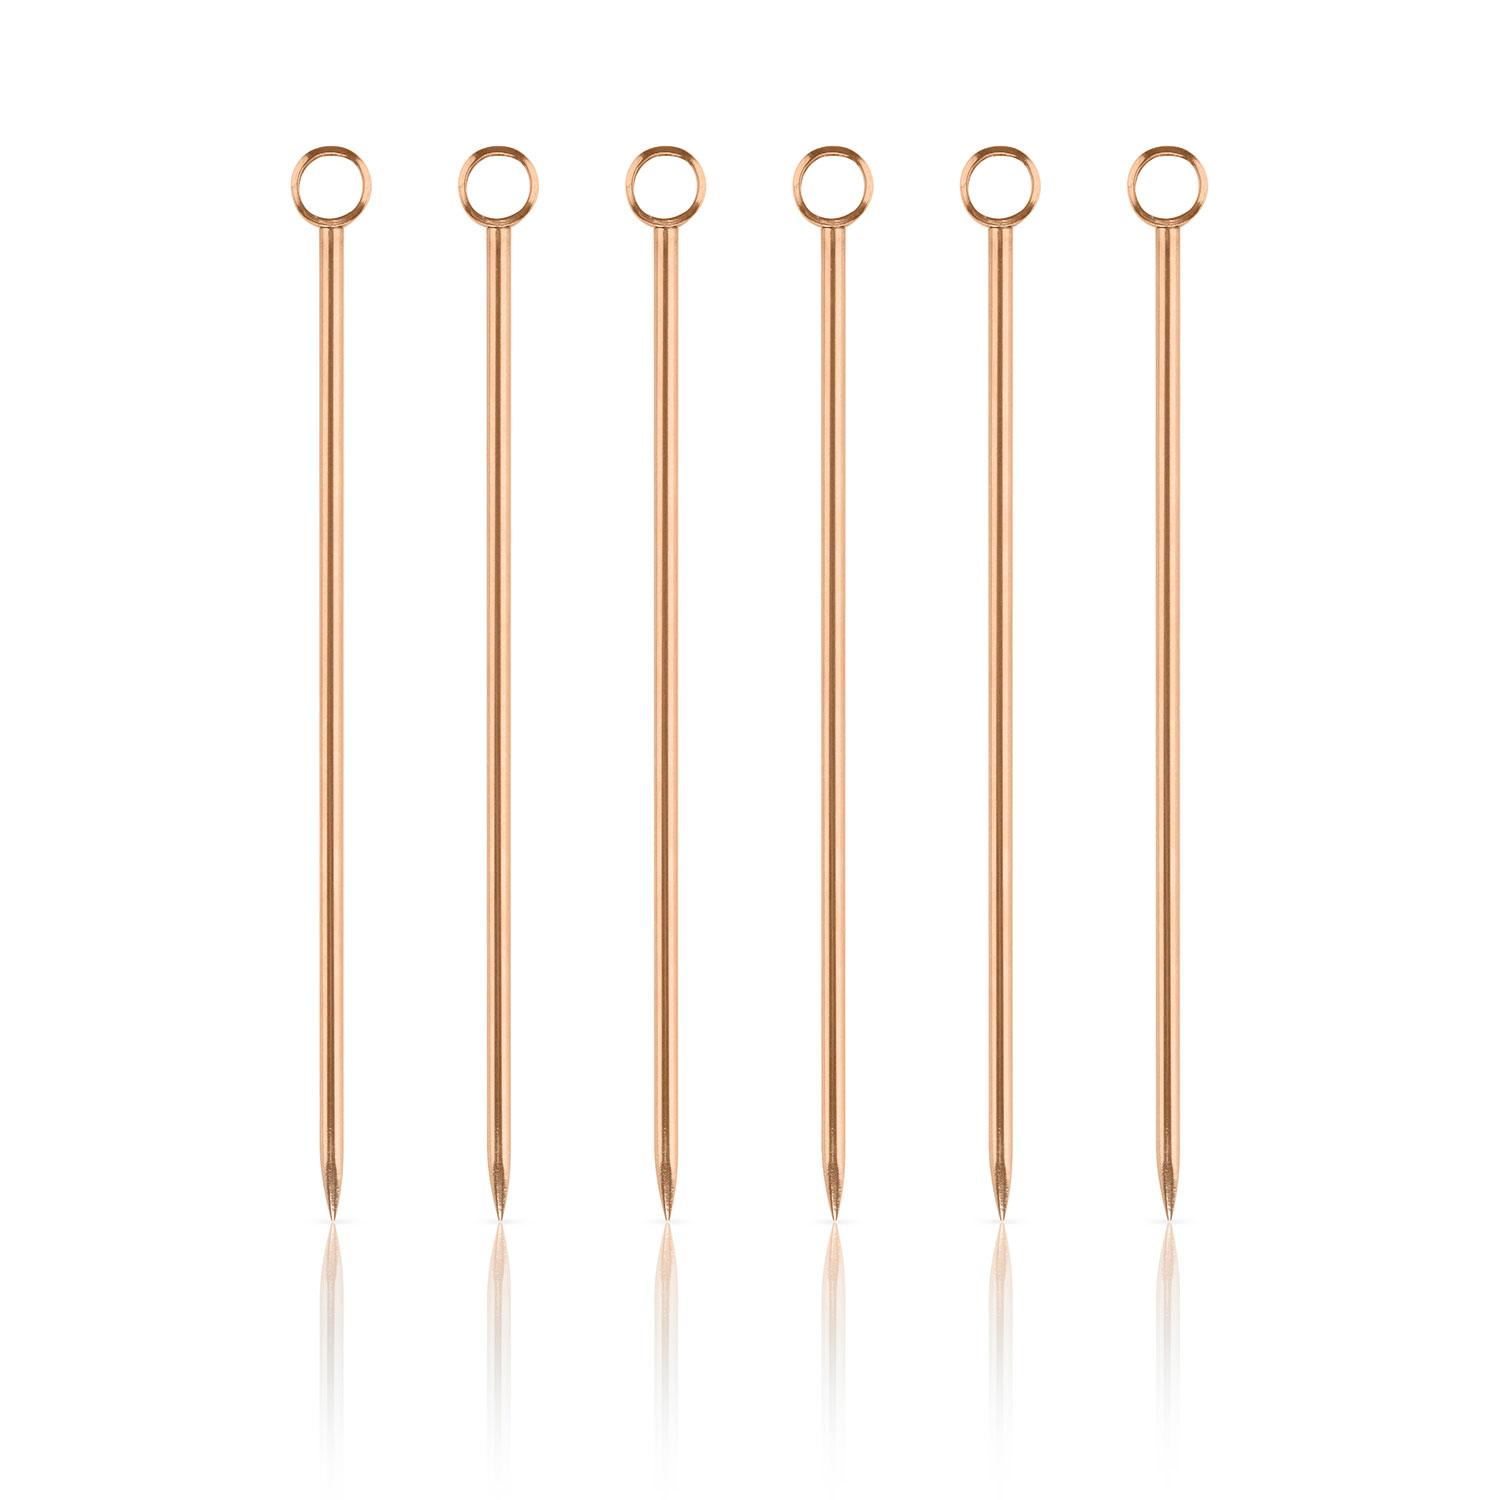 UBERSTAR Cocktail Sticks Set - Stainless Steel - Rose Gold